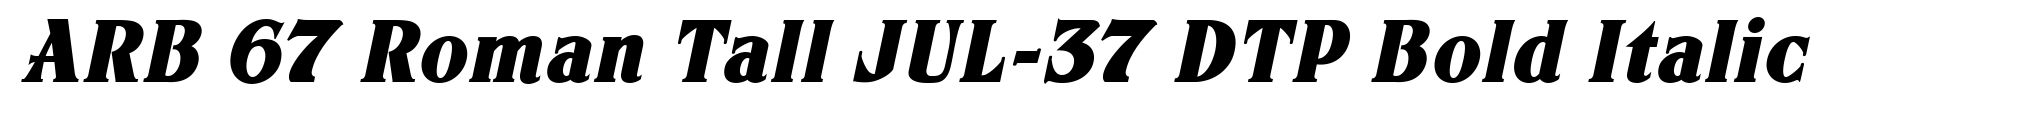 ARB 67 Roman Tall JUL-37 DTP Bold Italic image